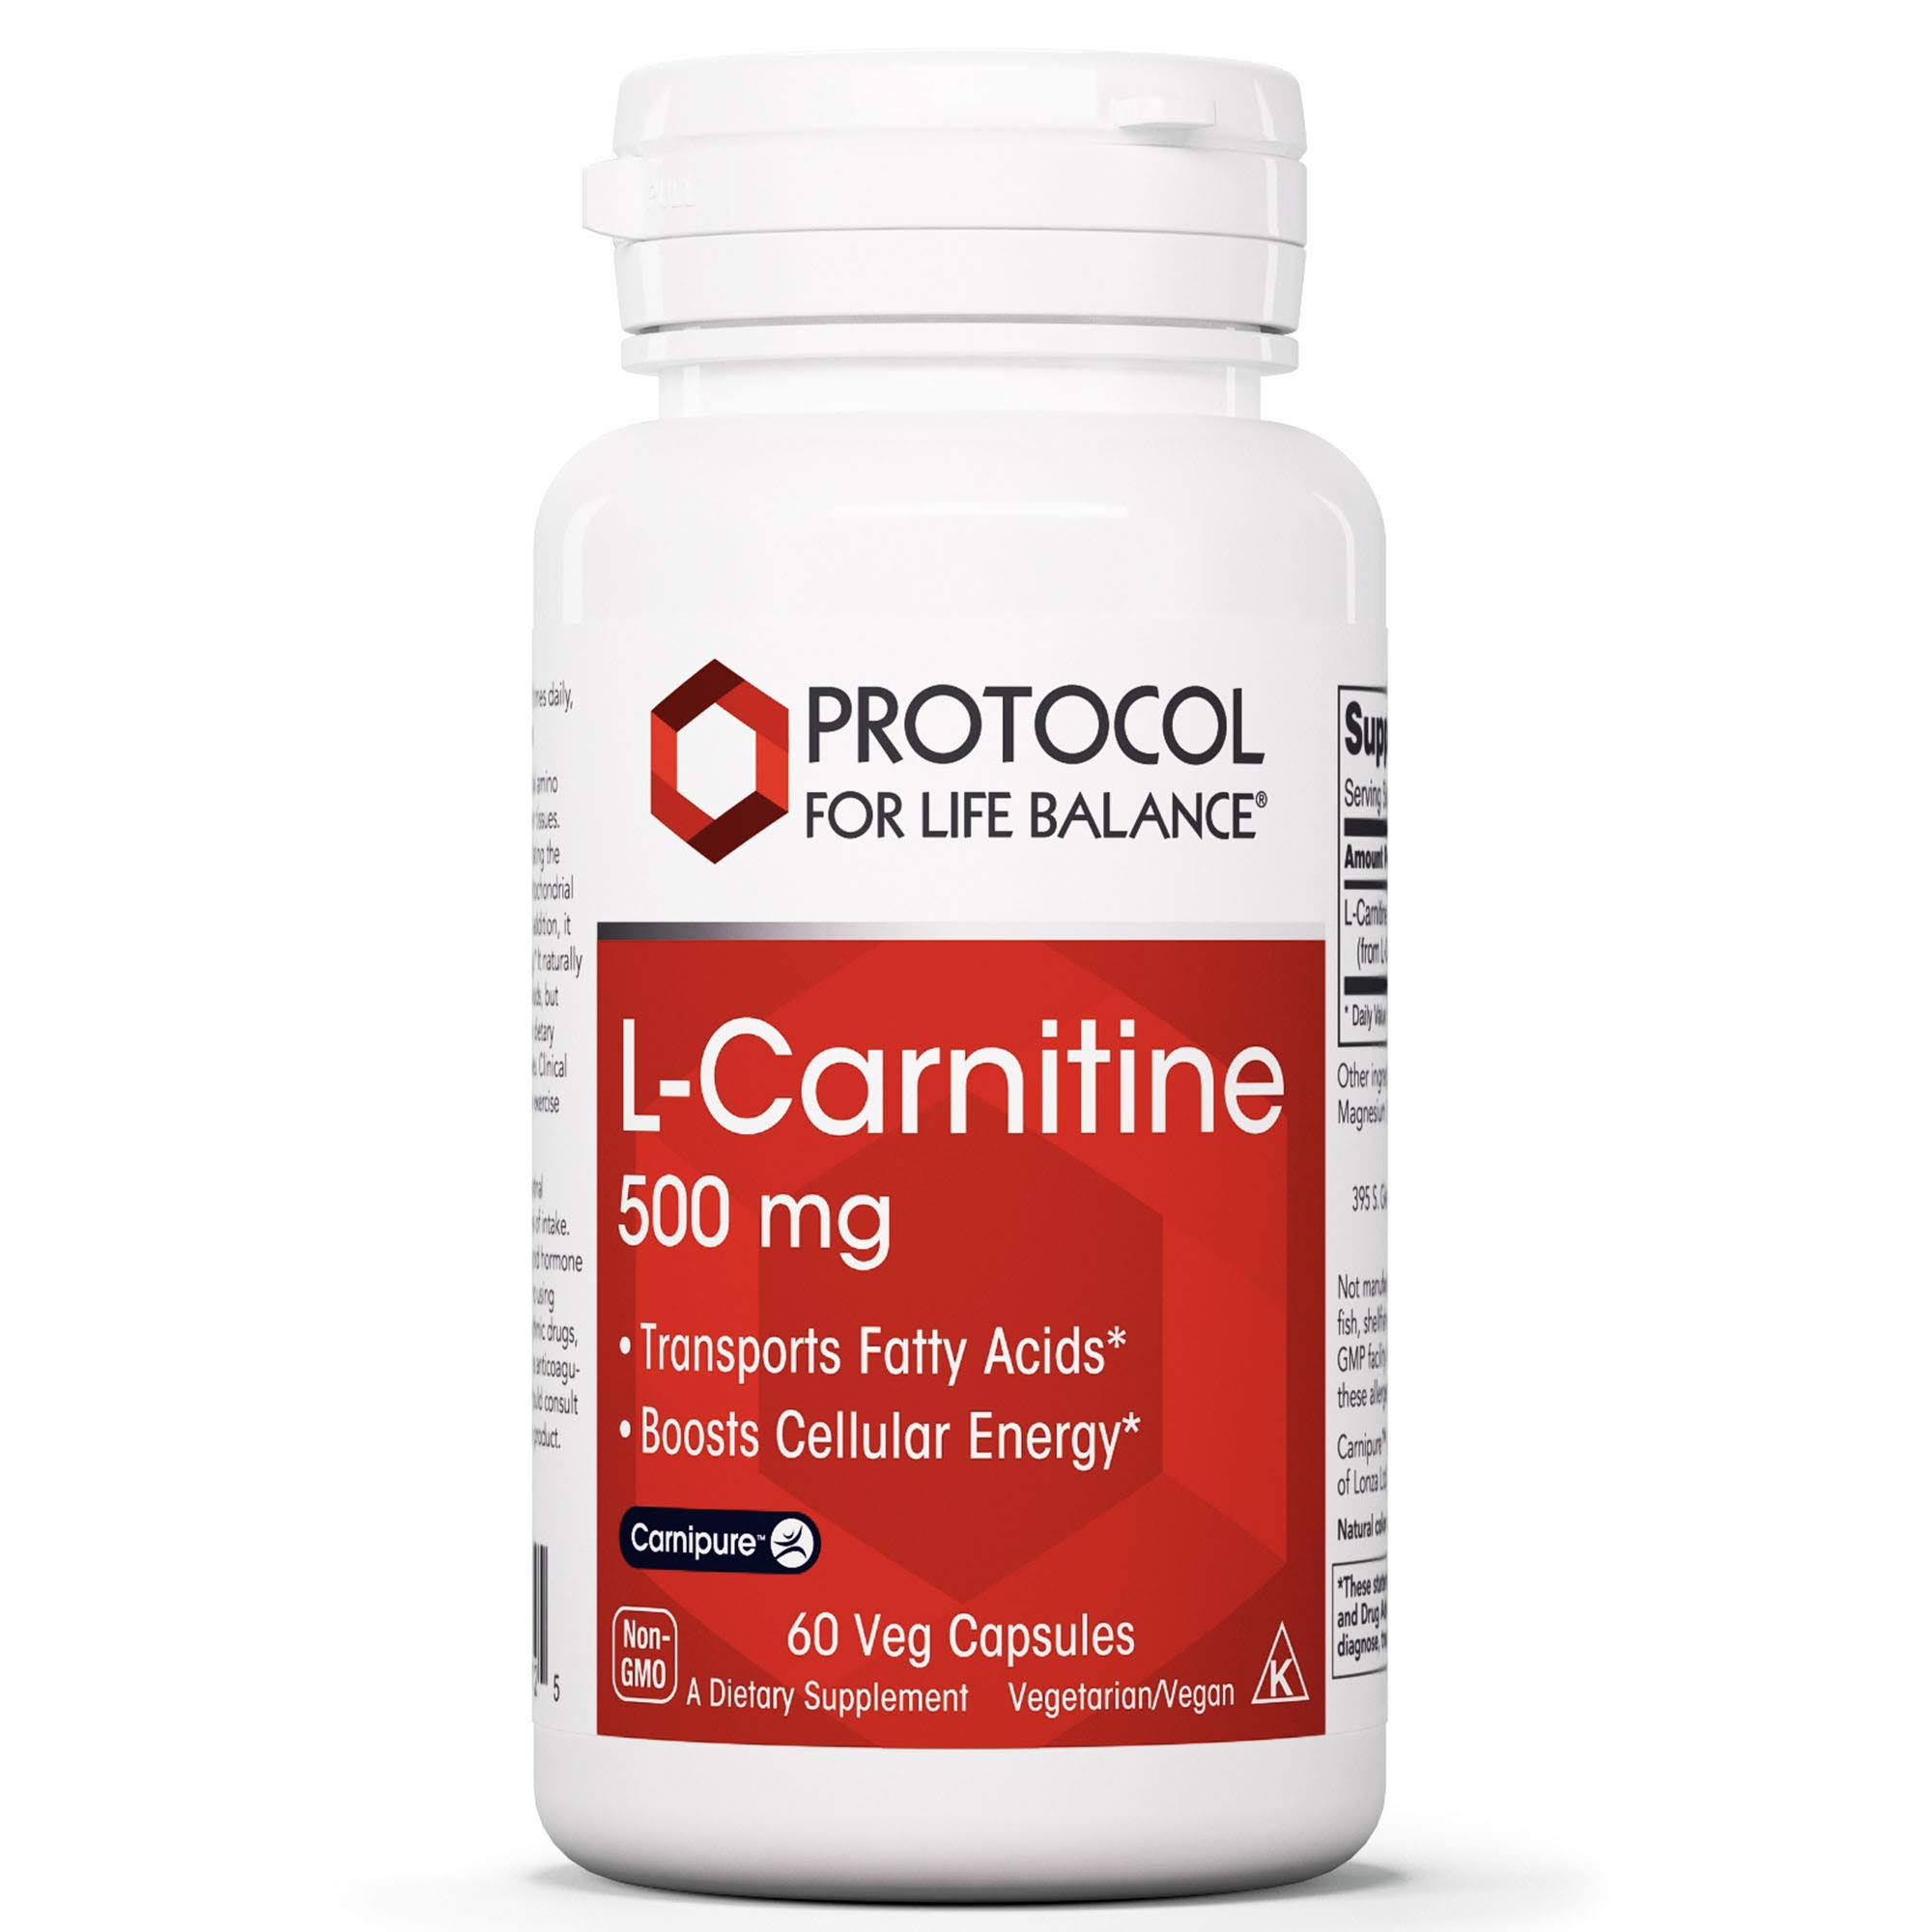 Protocol For Life Balance L Carnitine Supplement - 500mg, 60 Veg Capsules